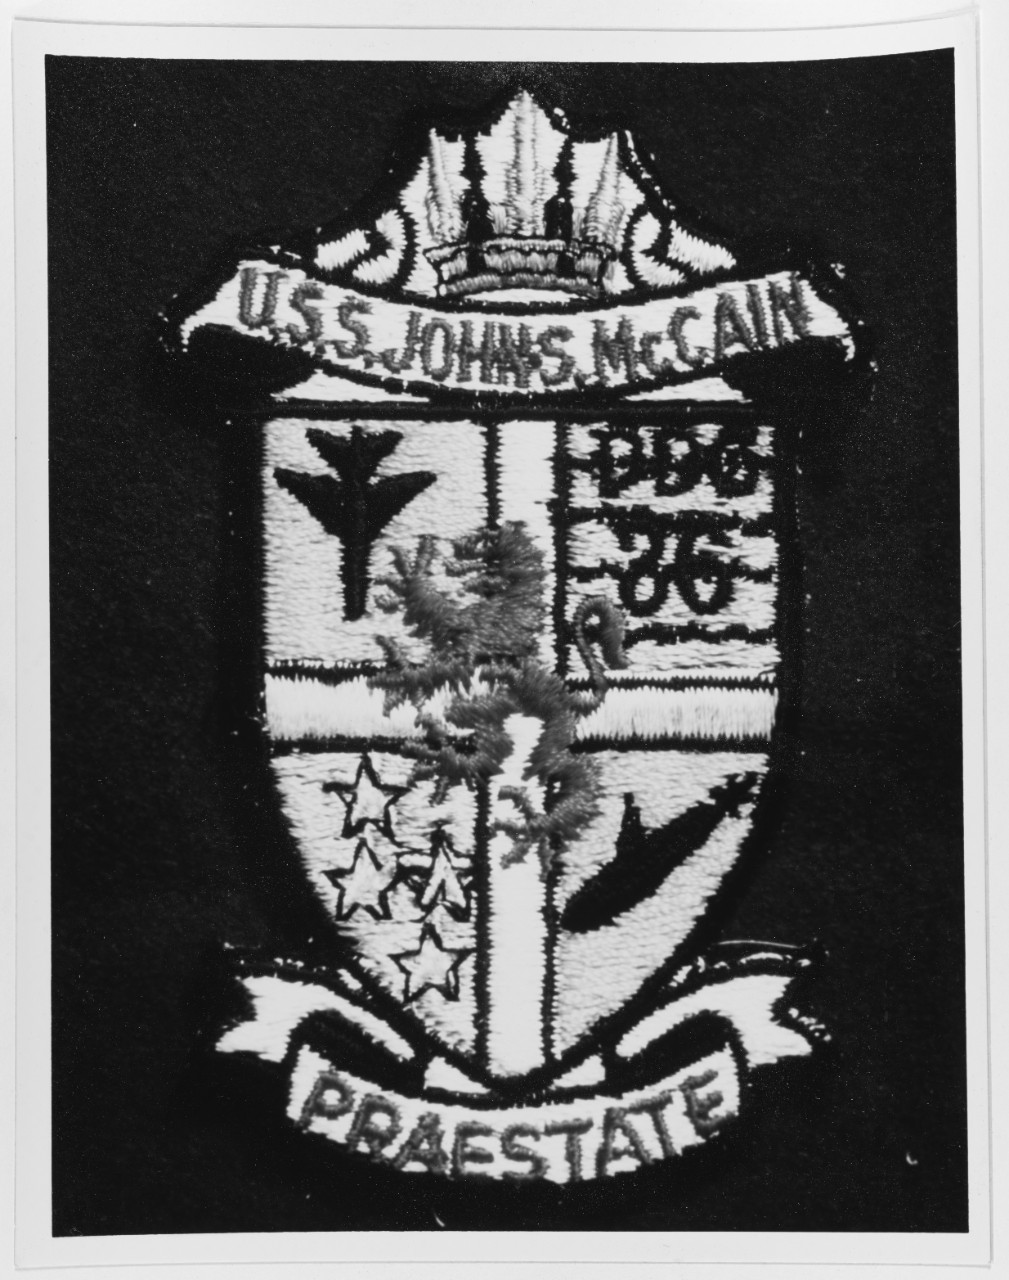 Insignia: JOHN S. McCAIN (DDG-36)